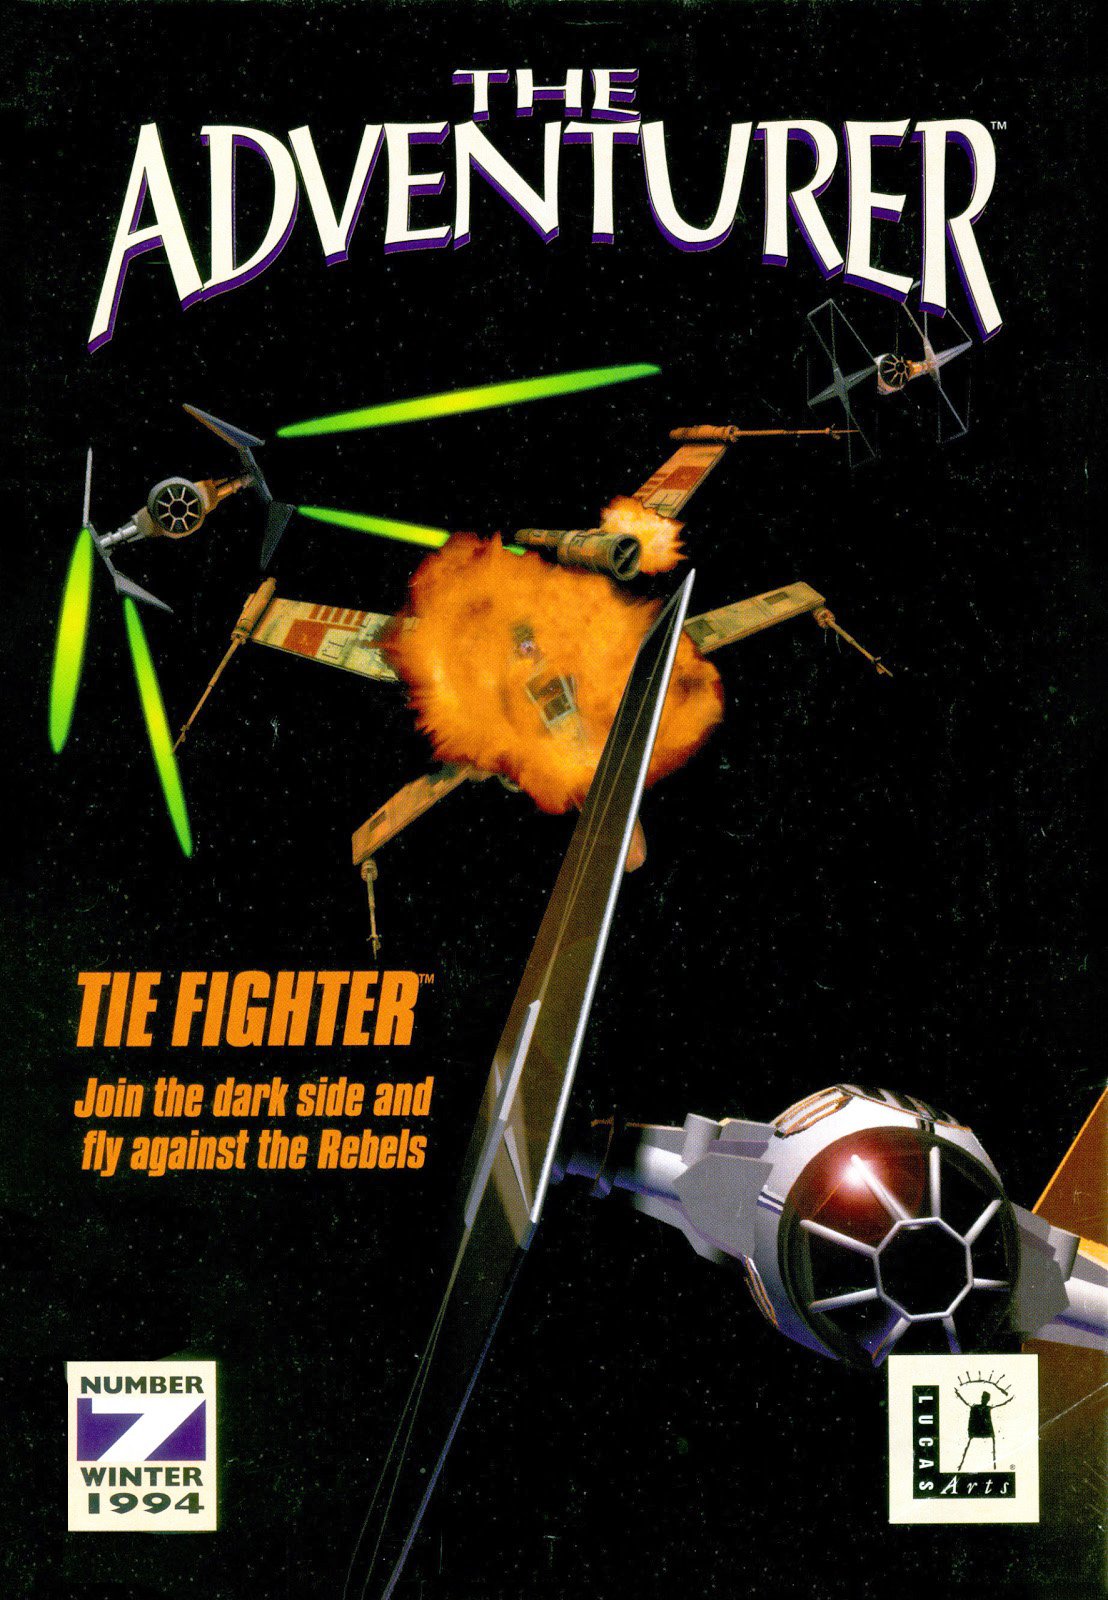 The Adventurer Issue 07 Winter 1994 - Adventurer, The - Retromags Community